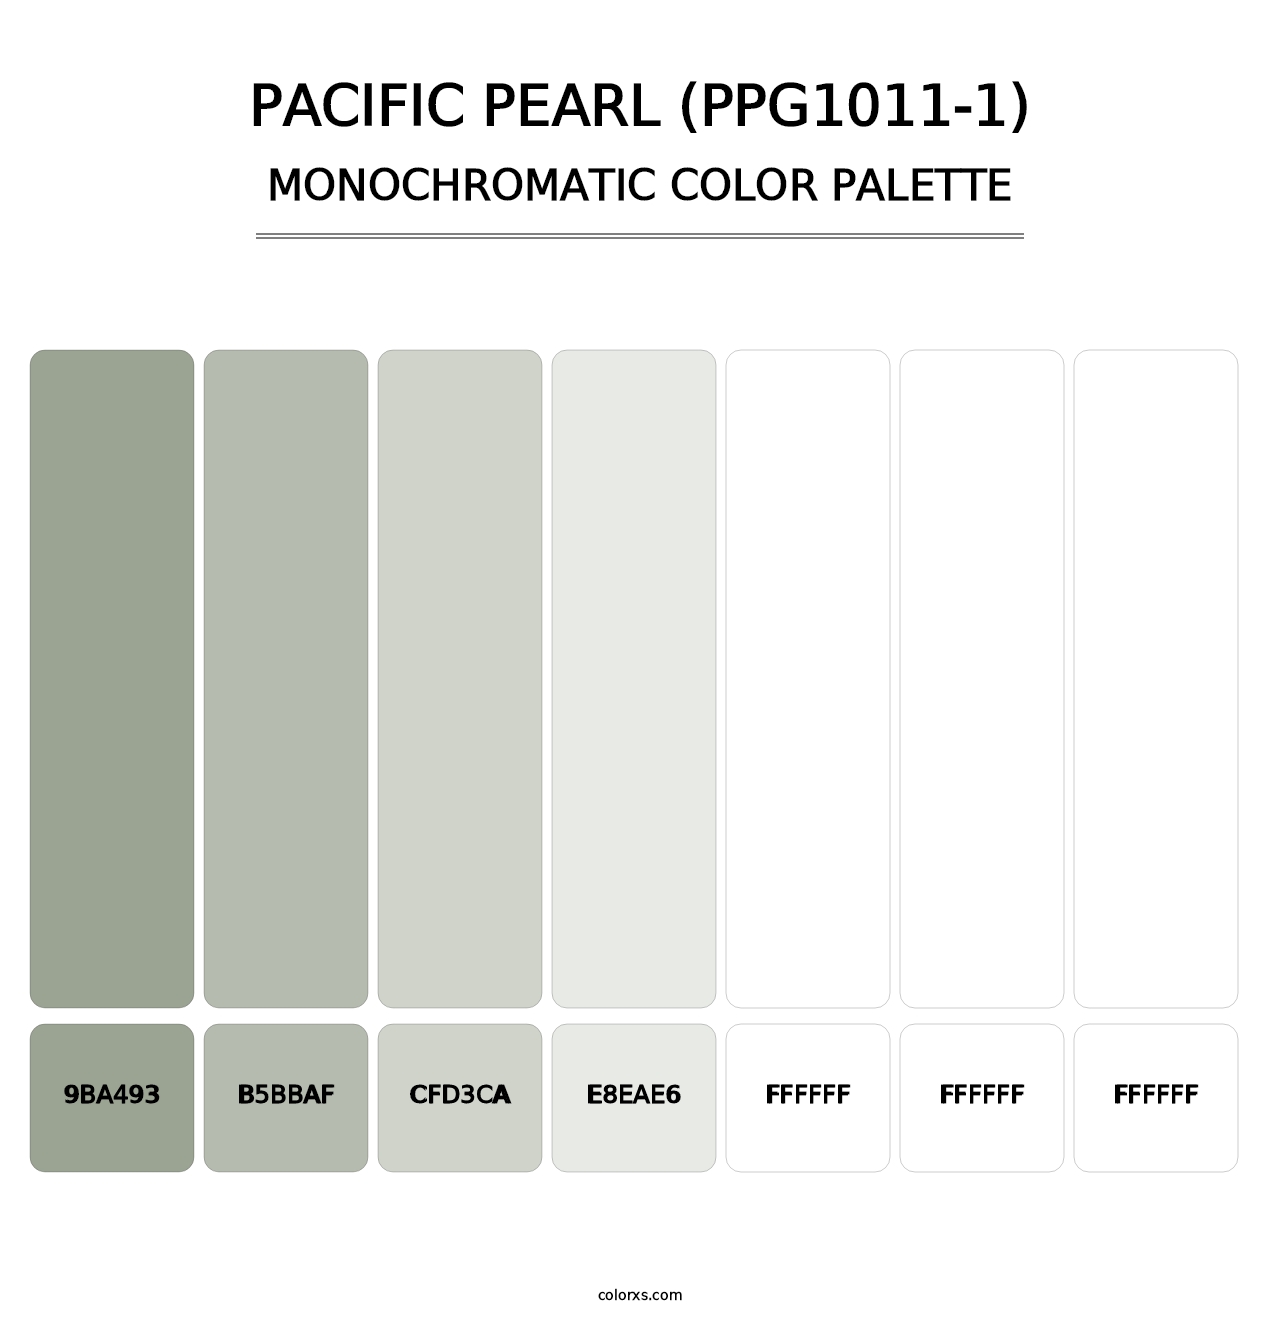 Pacific Pearl (PPG1011-1) - Monochromatic Color Palette